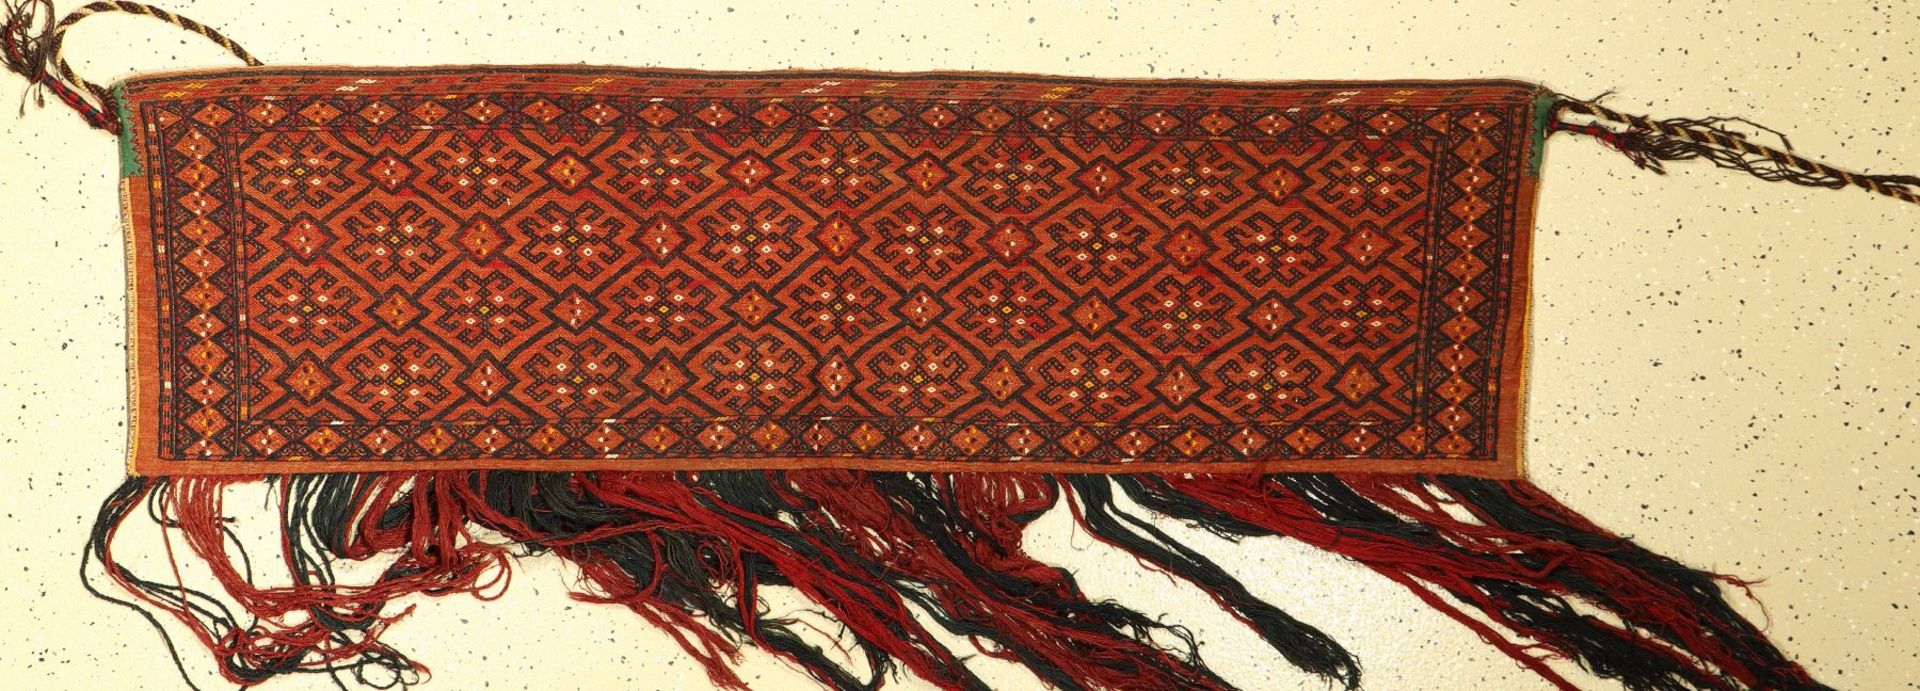 Yomud Torba alt (Flachgewebt), Turkmenistan, um 1920, Wolle auf Wolle, EHZ: 2-3.Yomut "Torba" (